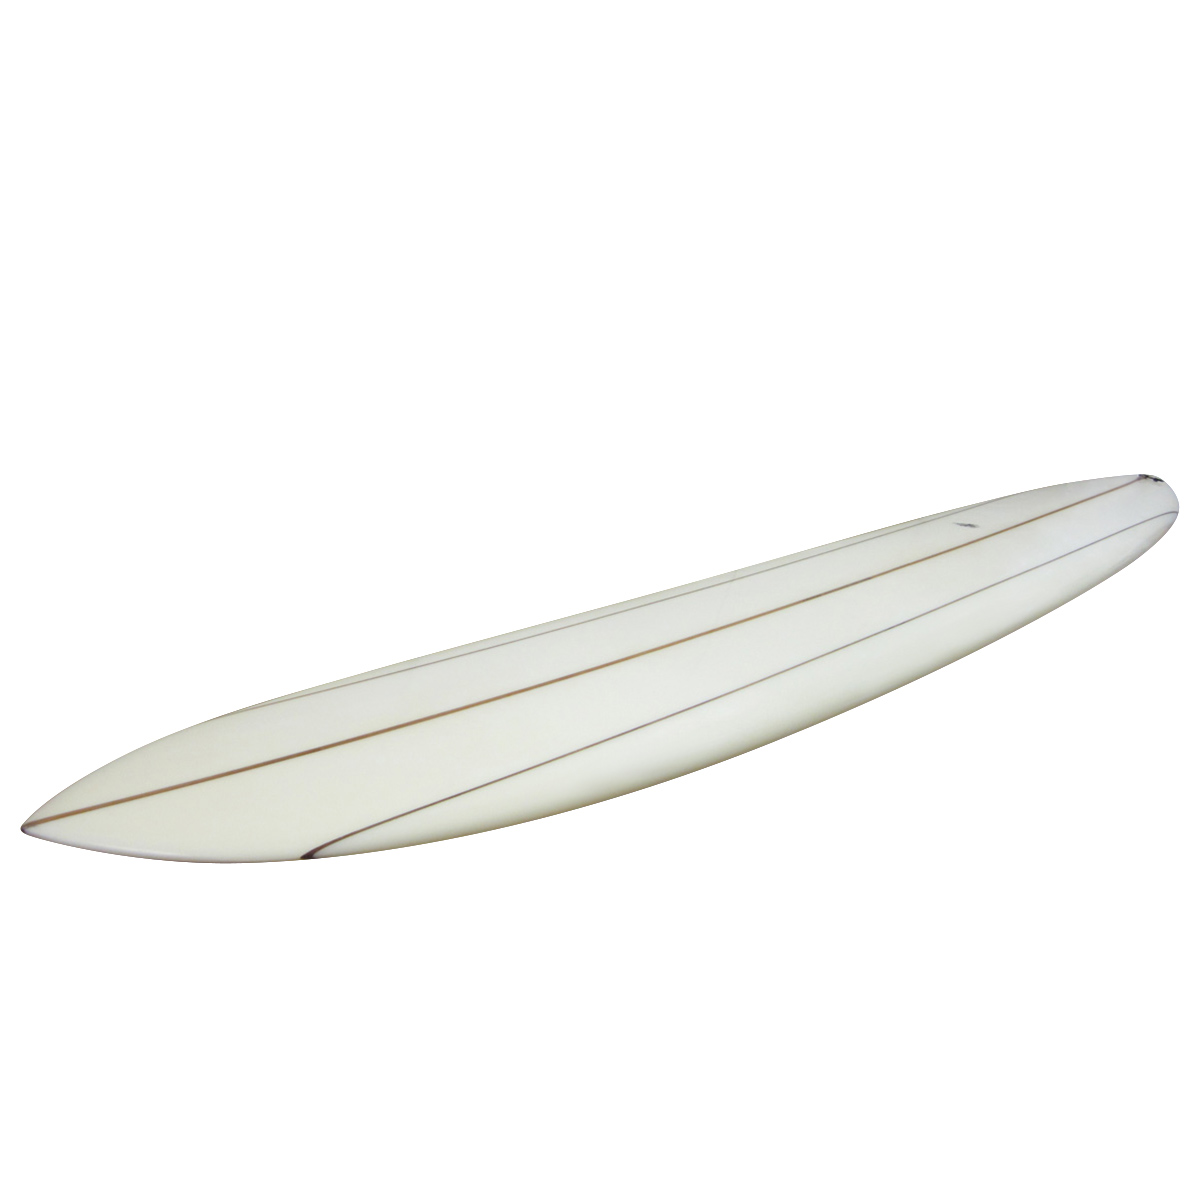 DEGAWA SURFBOARDS / Eagle 10`6